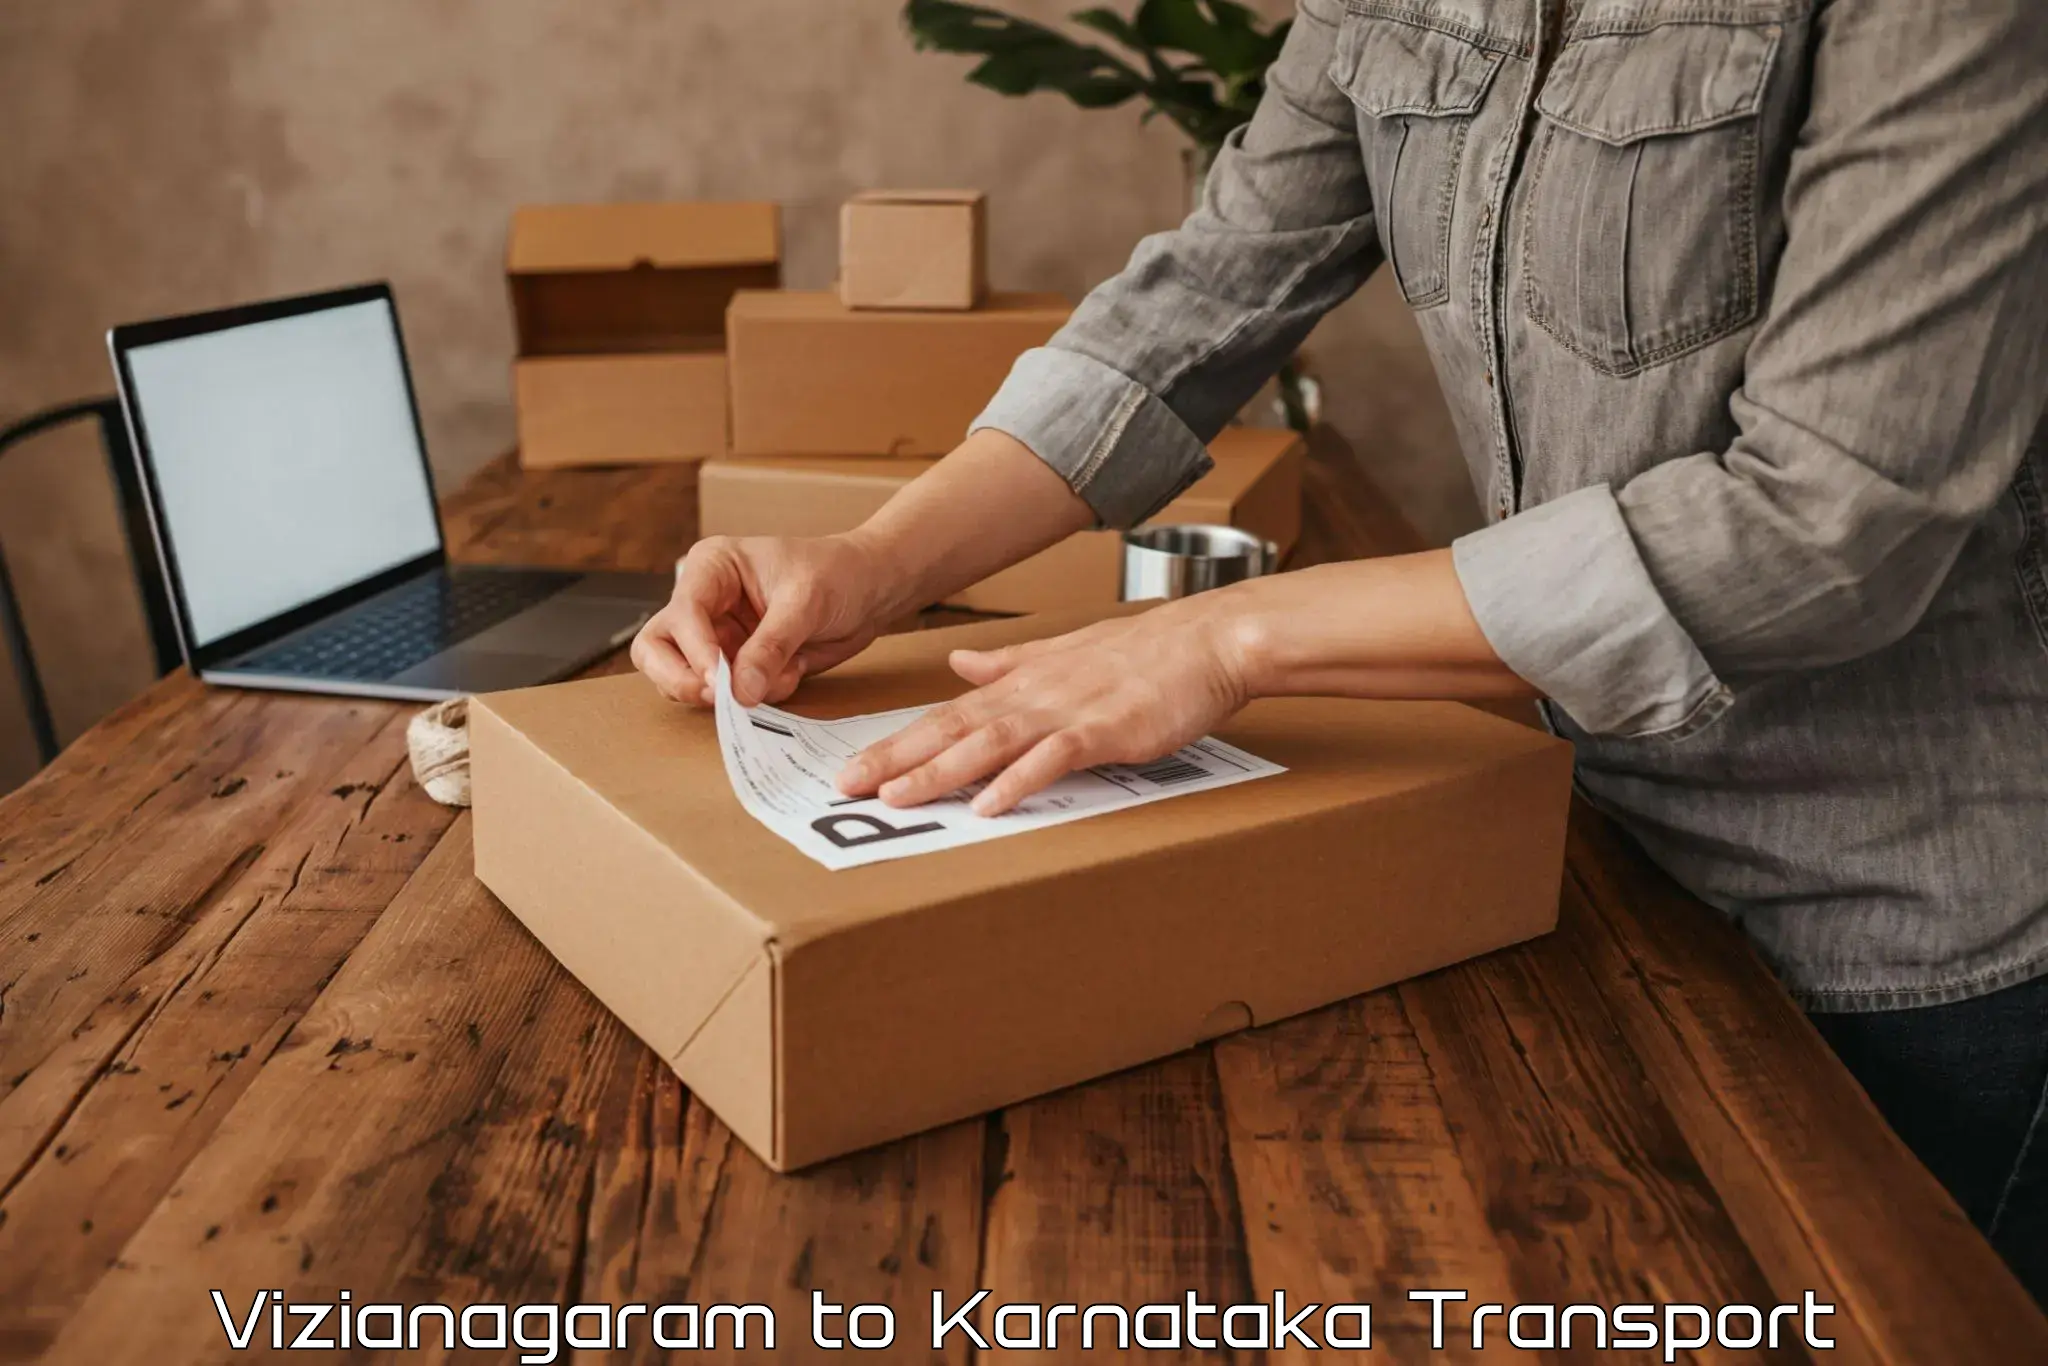 Transport in sharing Vizianagaram to Karnataka